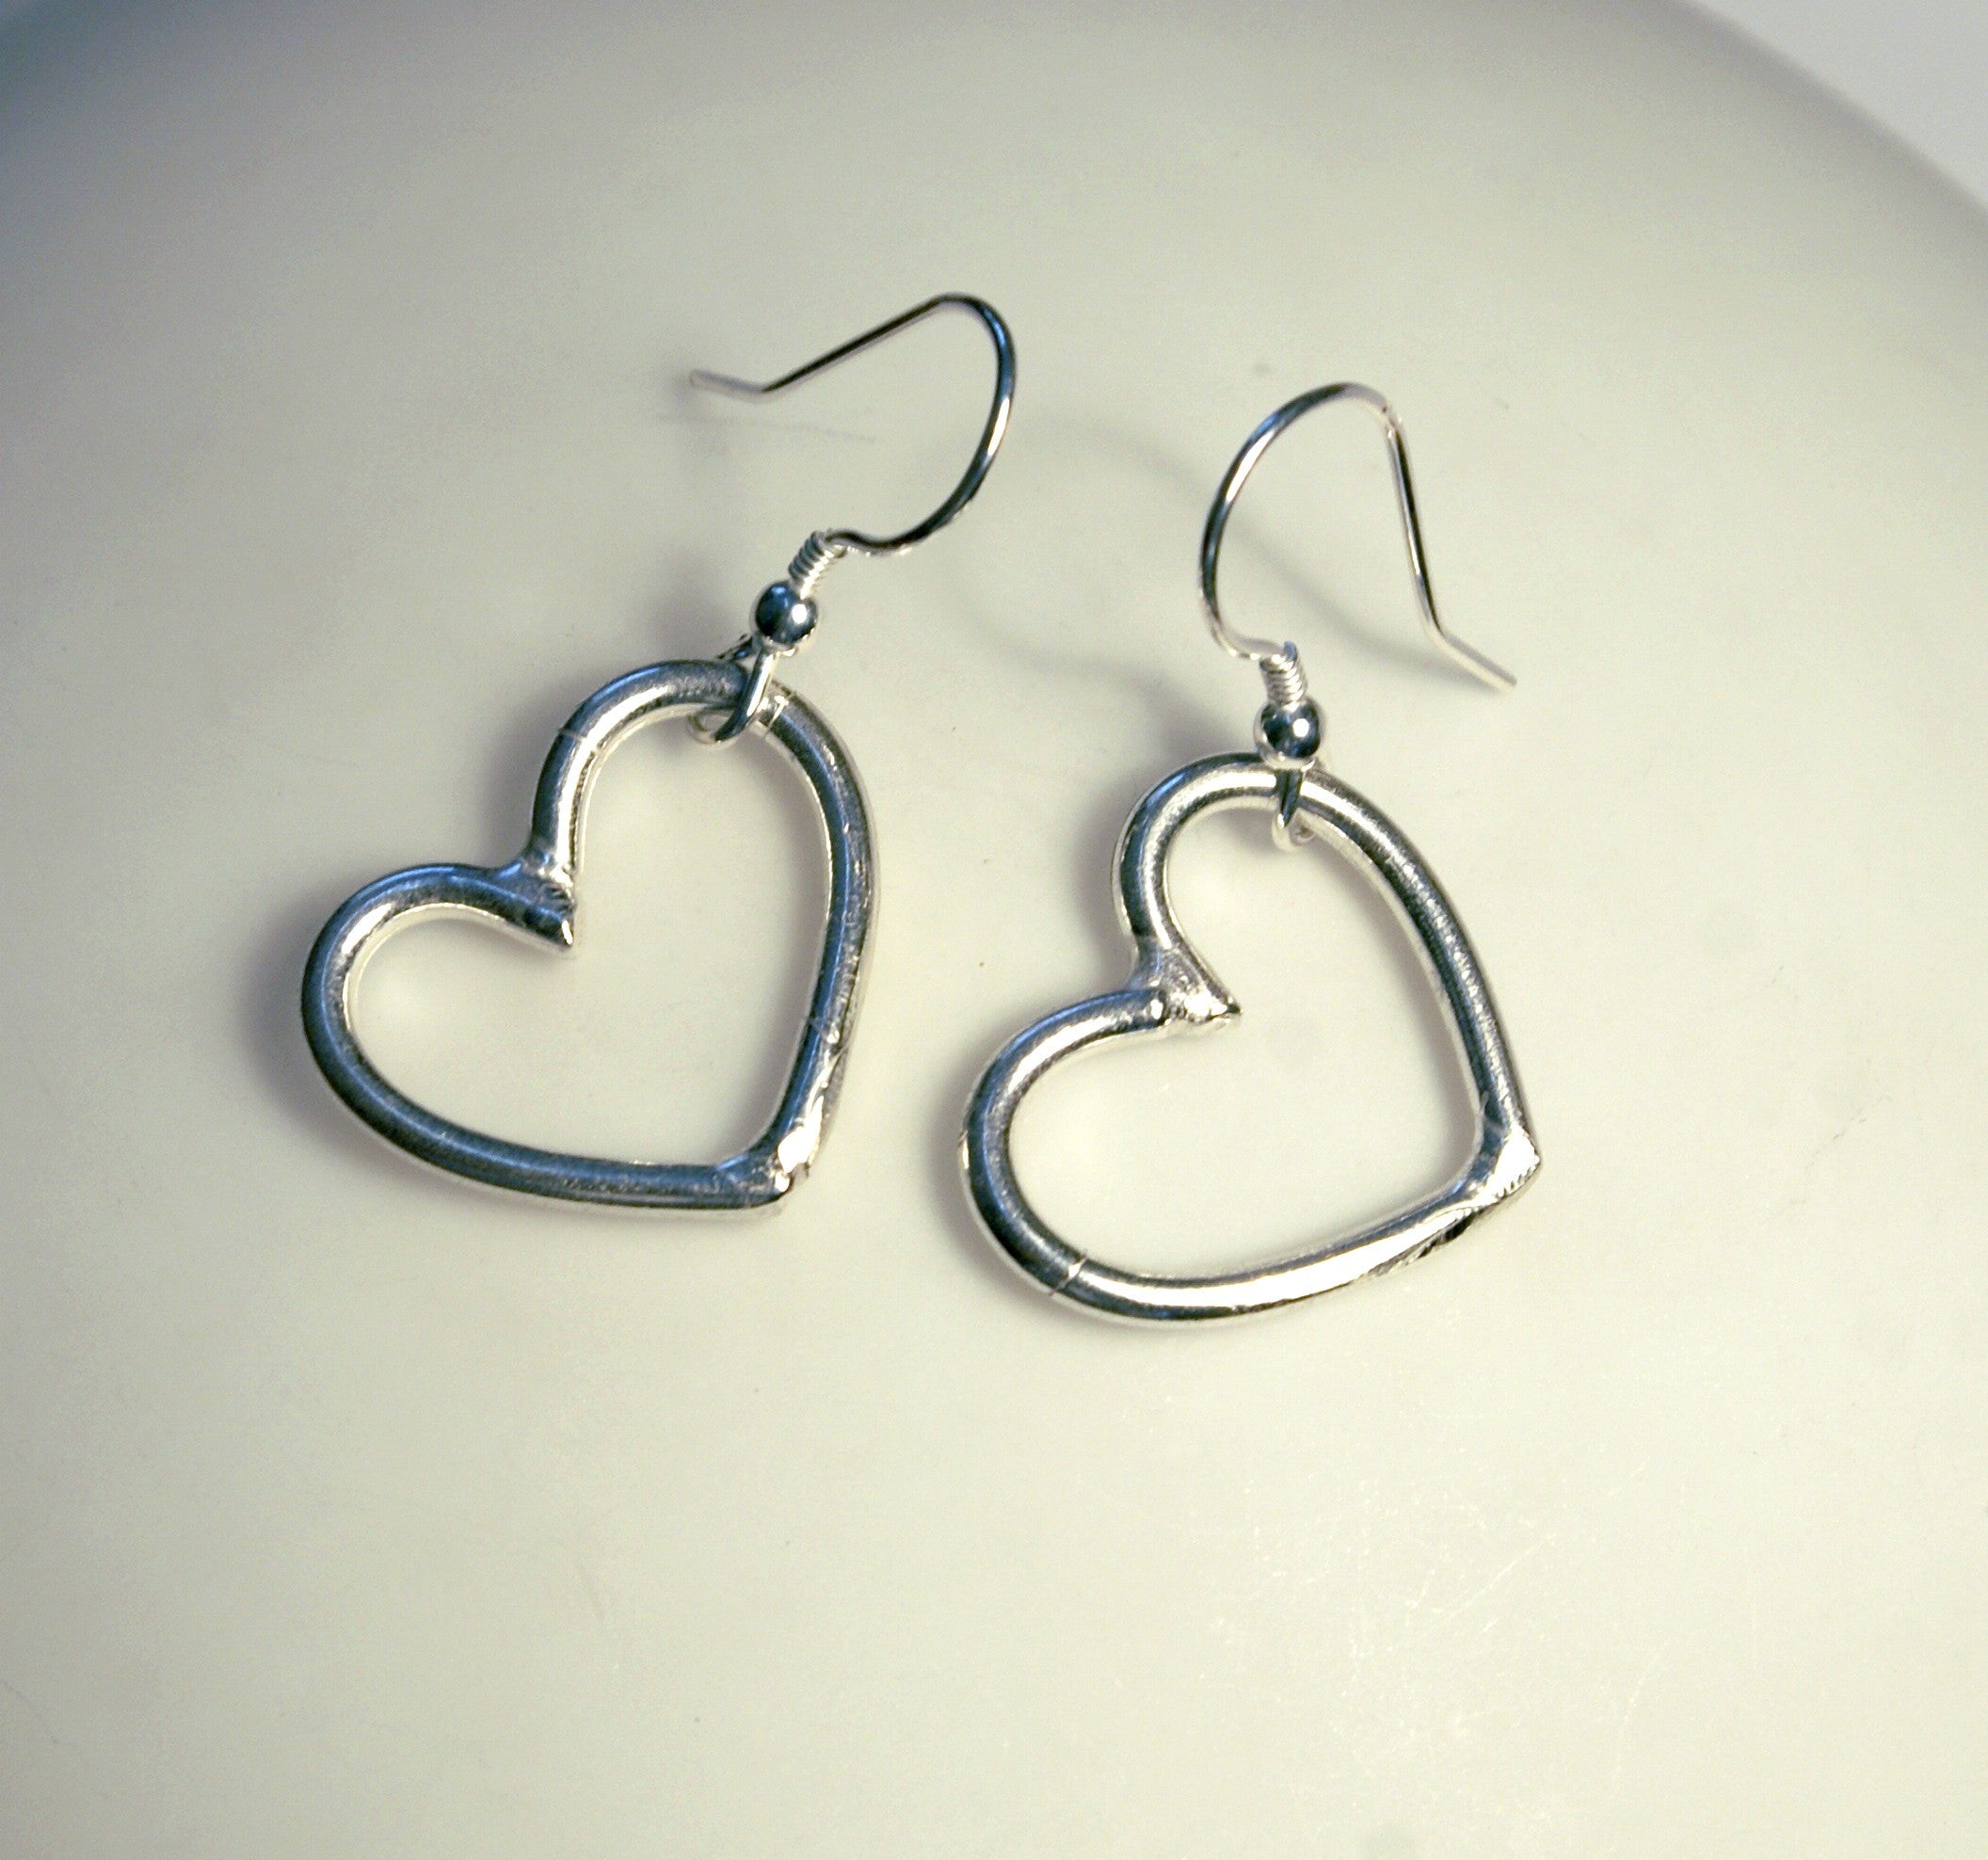 Small Heart Hoop Earrings - The Nancy Smillie Shop - Art, Jewellery & Designer Gifts Glasgow